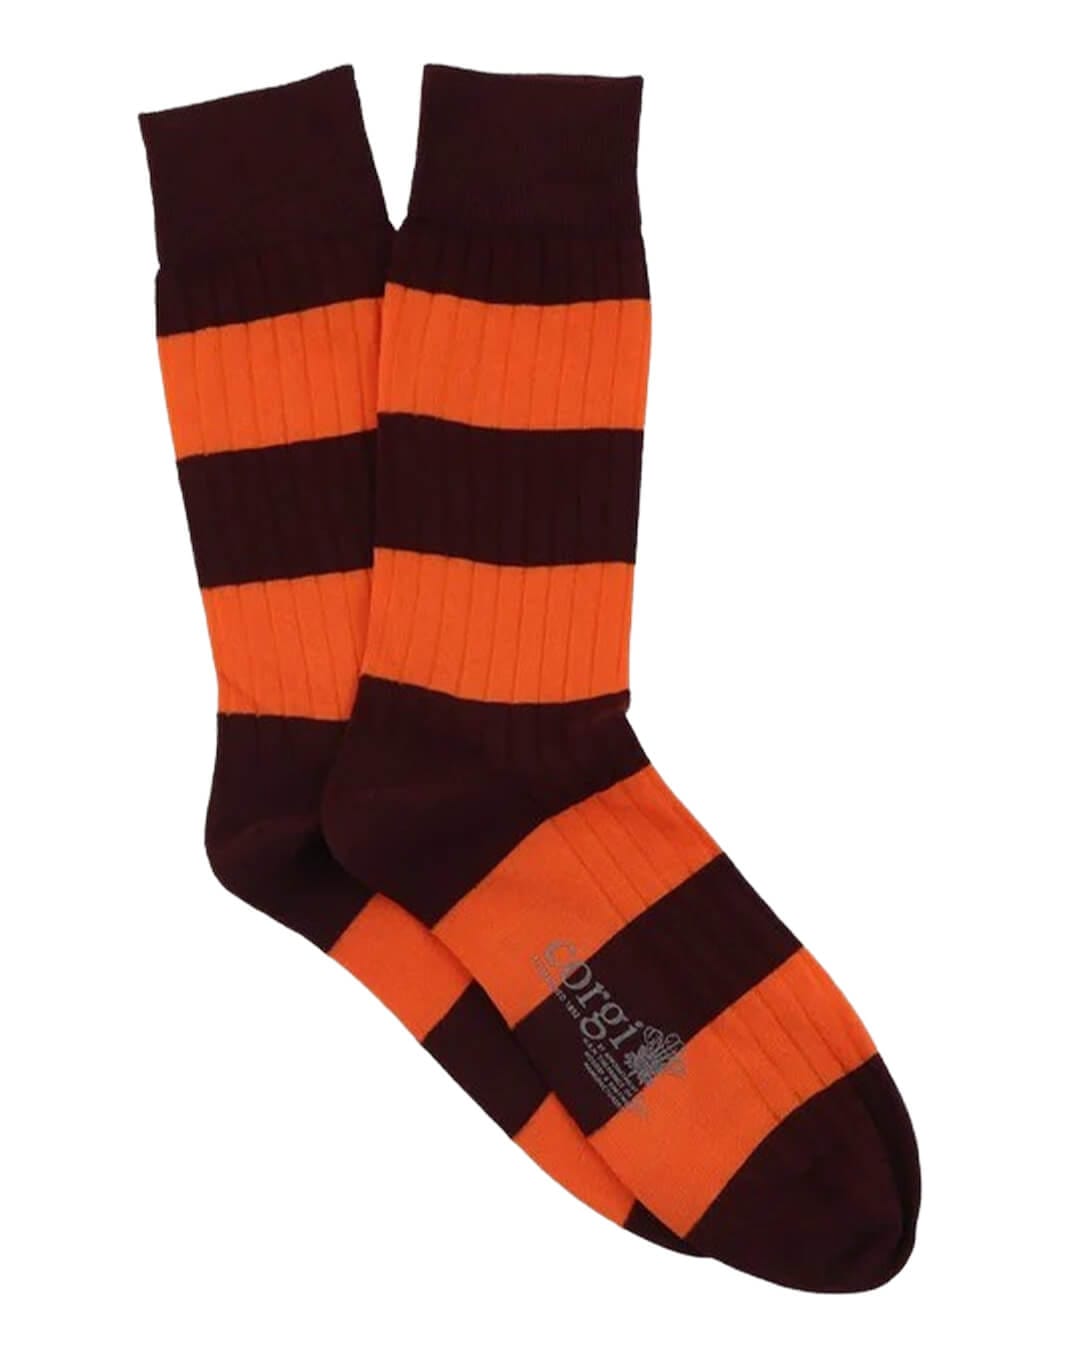 Corgi Socks Corgi Rugby Striped Orange Socks